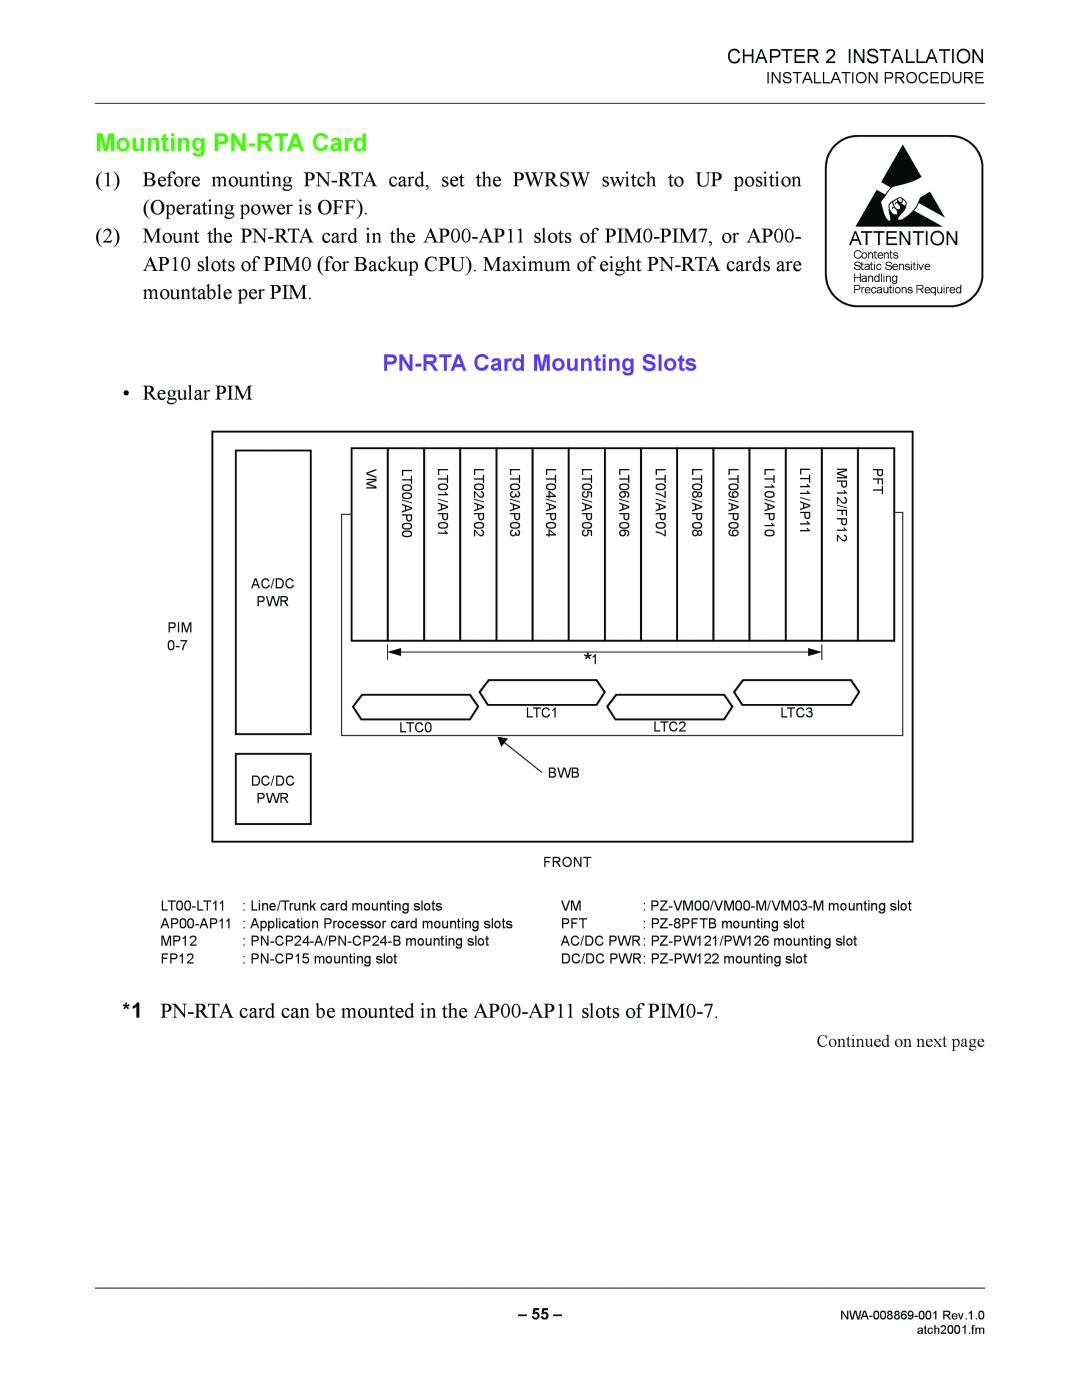 NEC NWA-008869-001 manual Mounting PN-RTA Card, PN-RTA Card Mounting Slots 